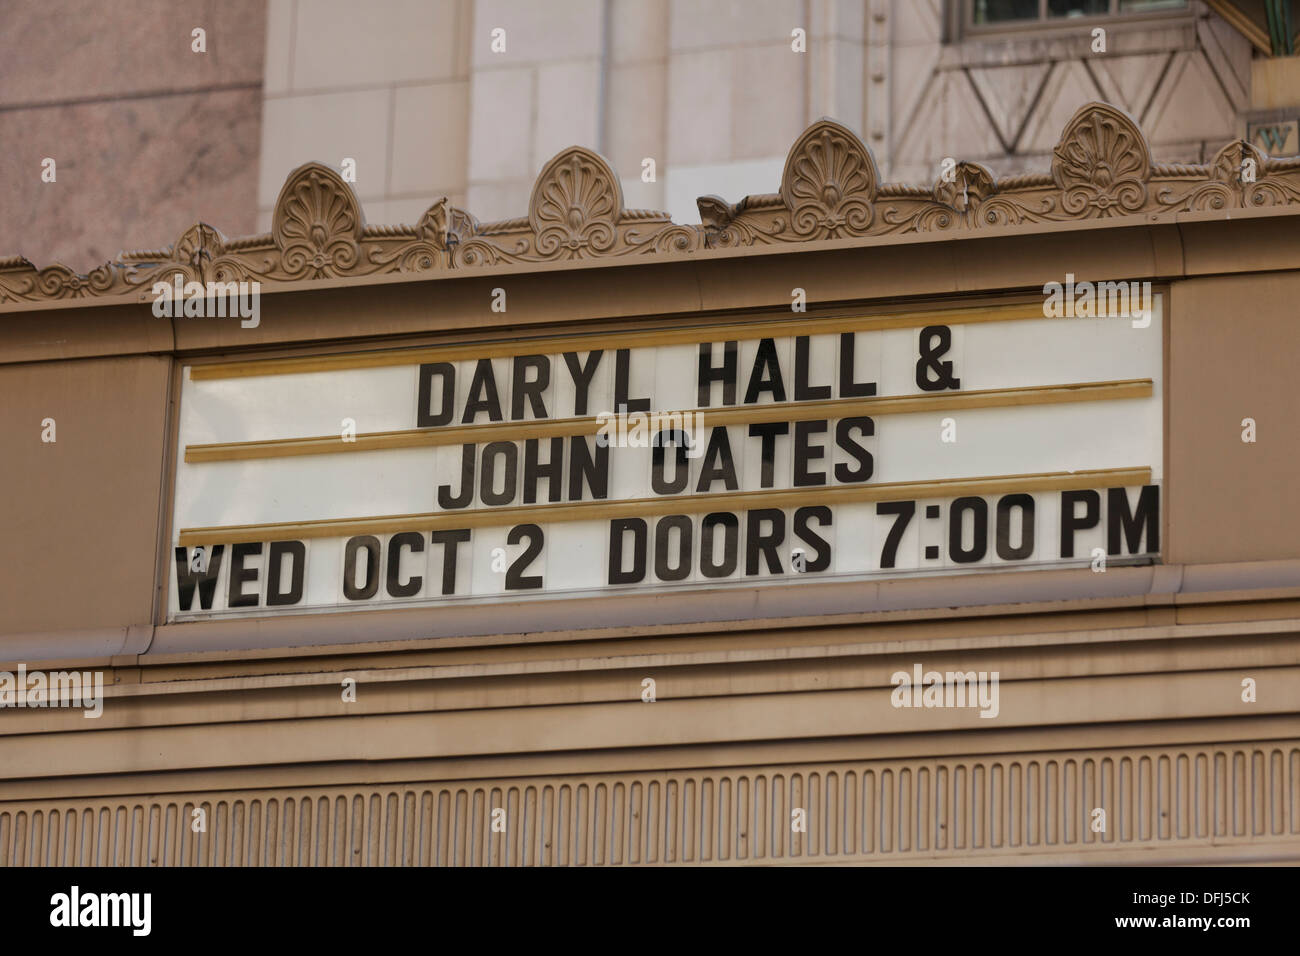 Halle & Oates auf Theater Festzelt Stockfoto